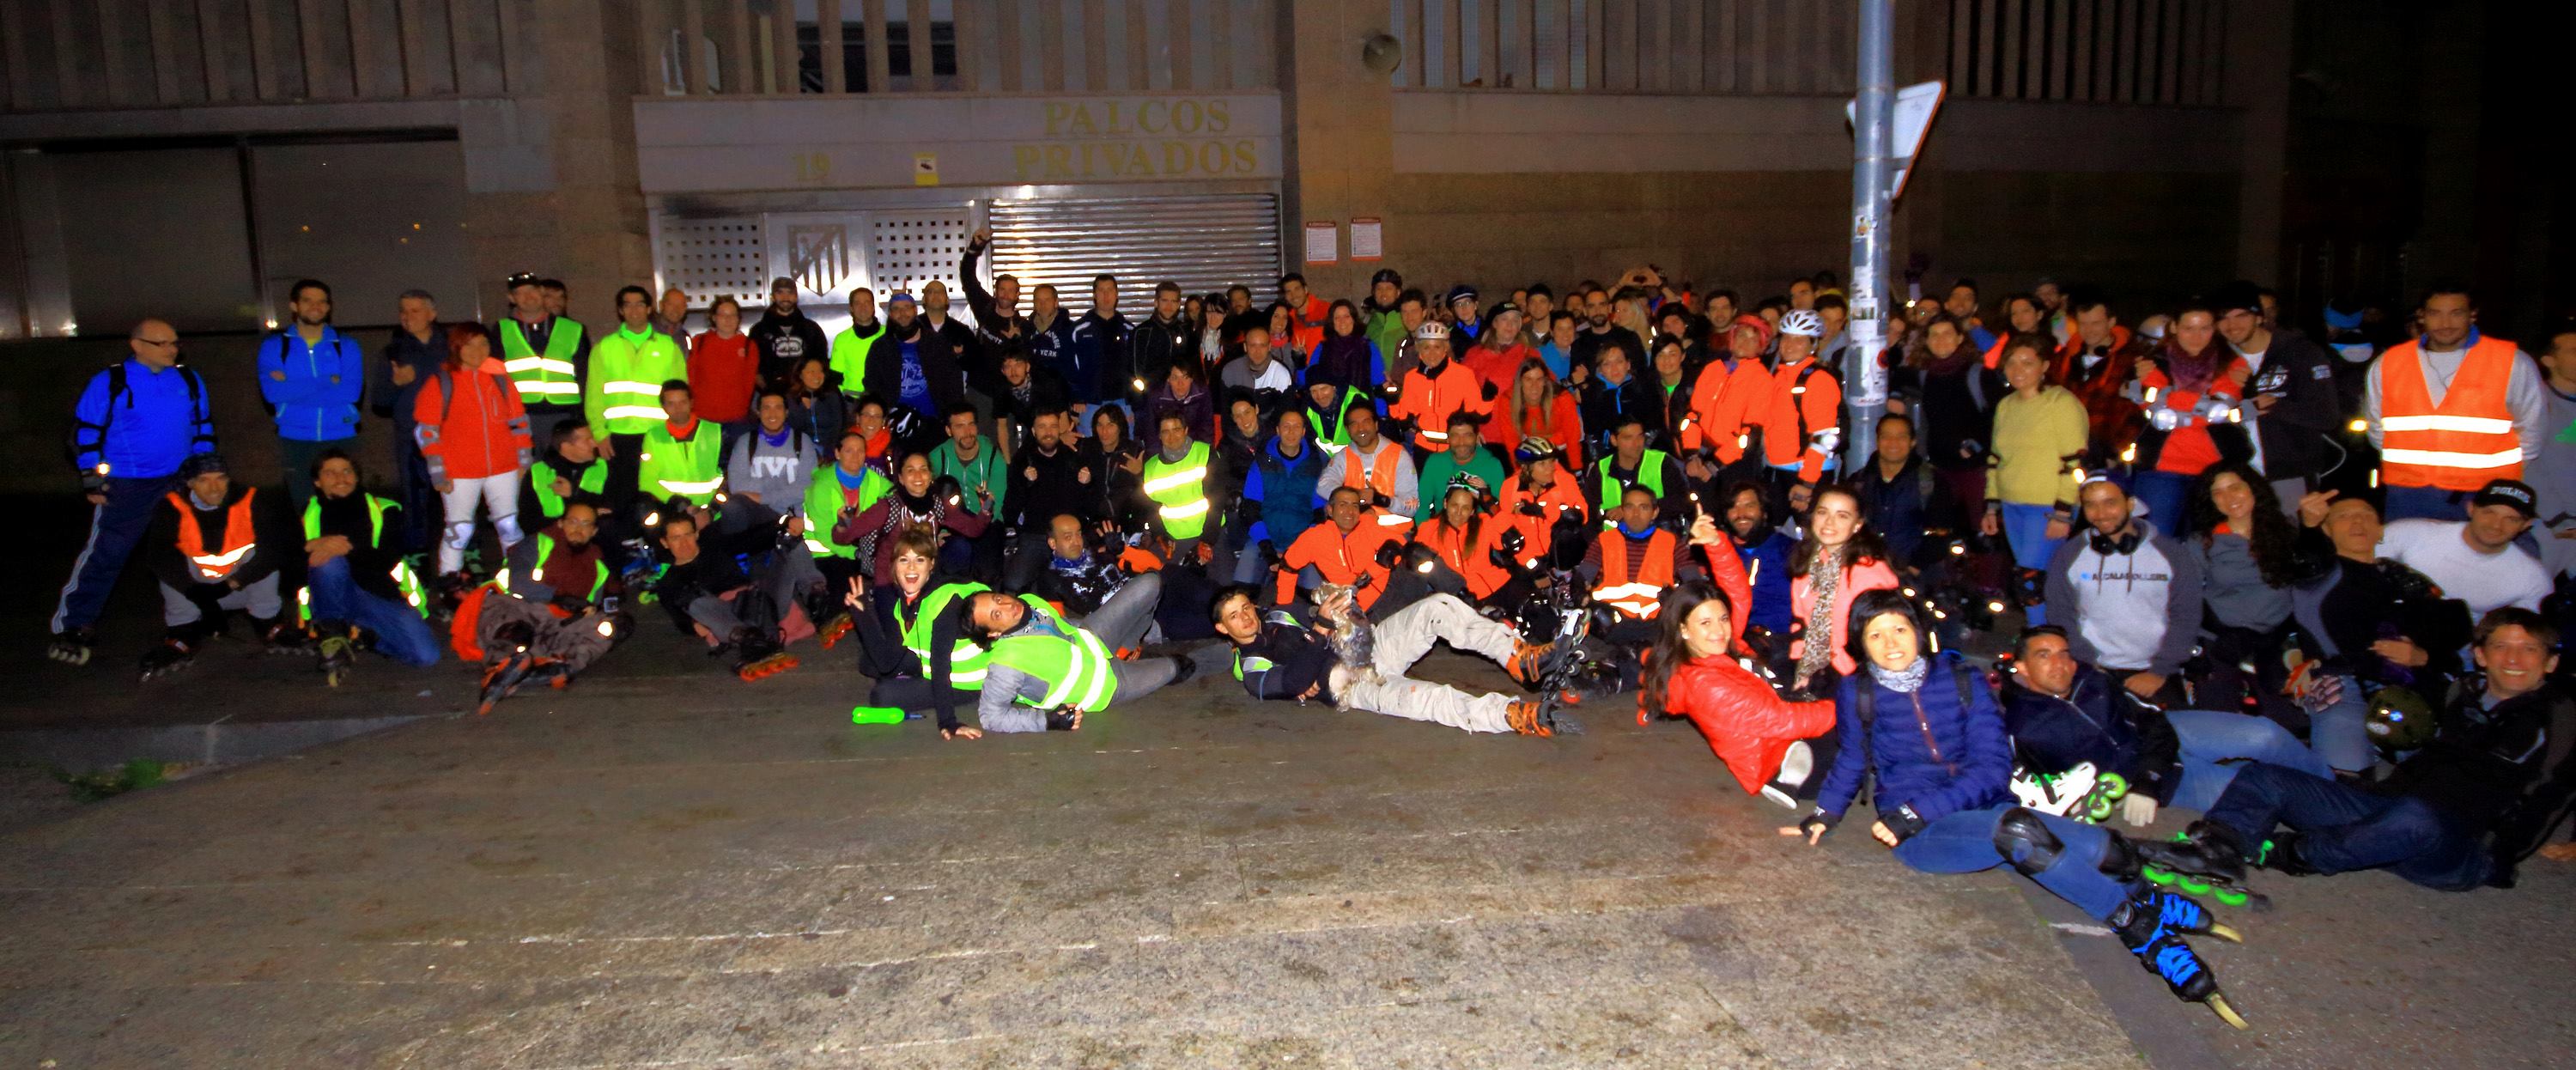 Group photo Madrid Friday Night Skate 2016 11 18